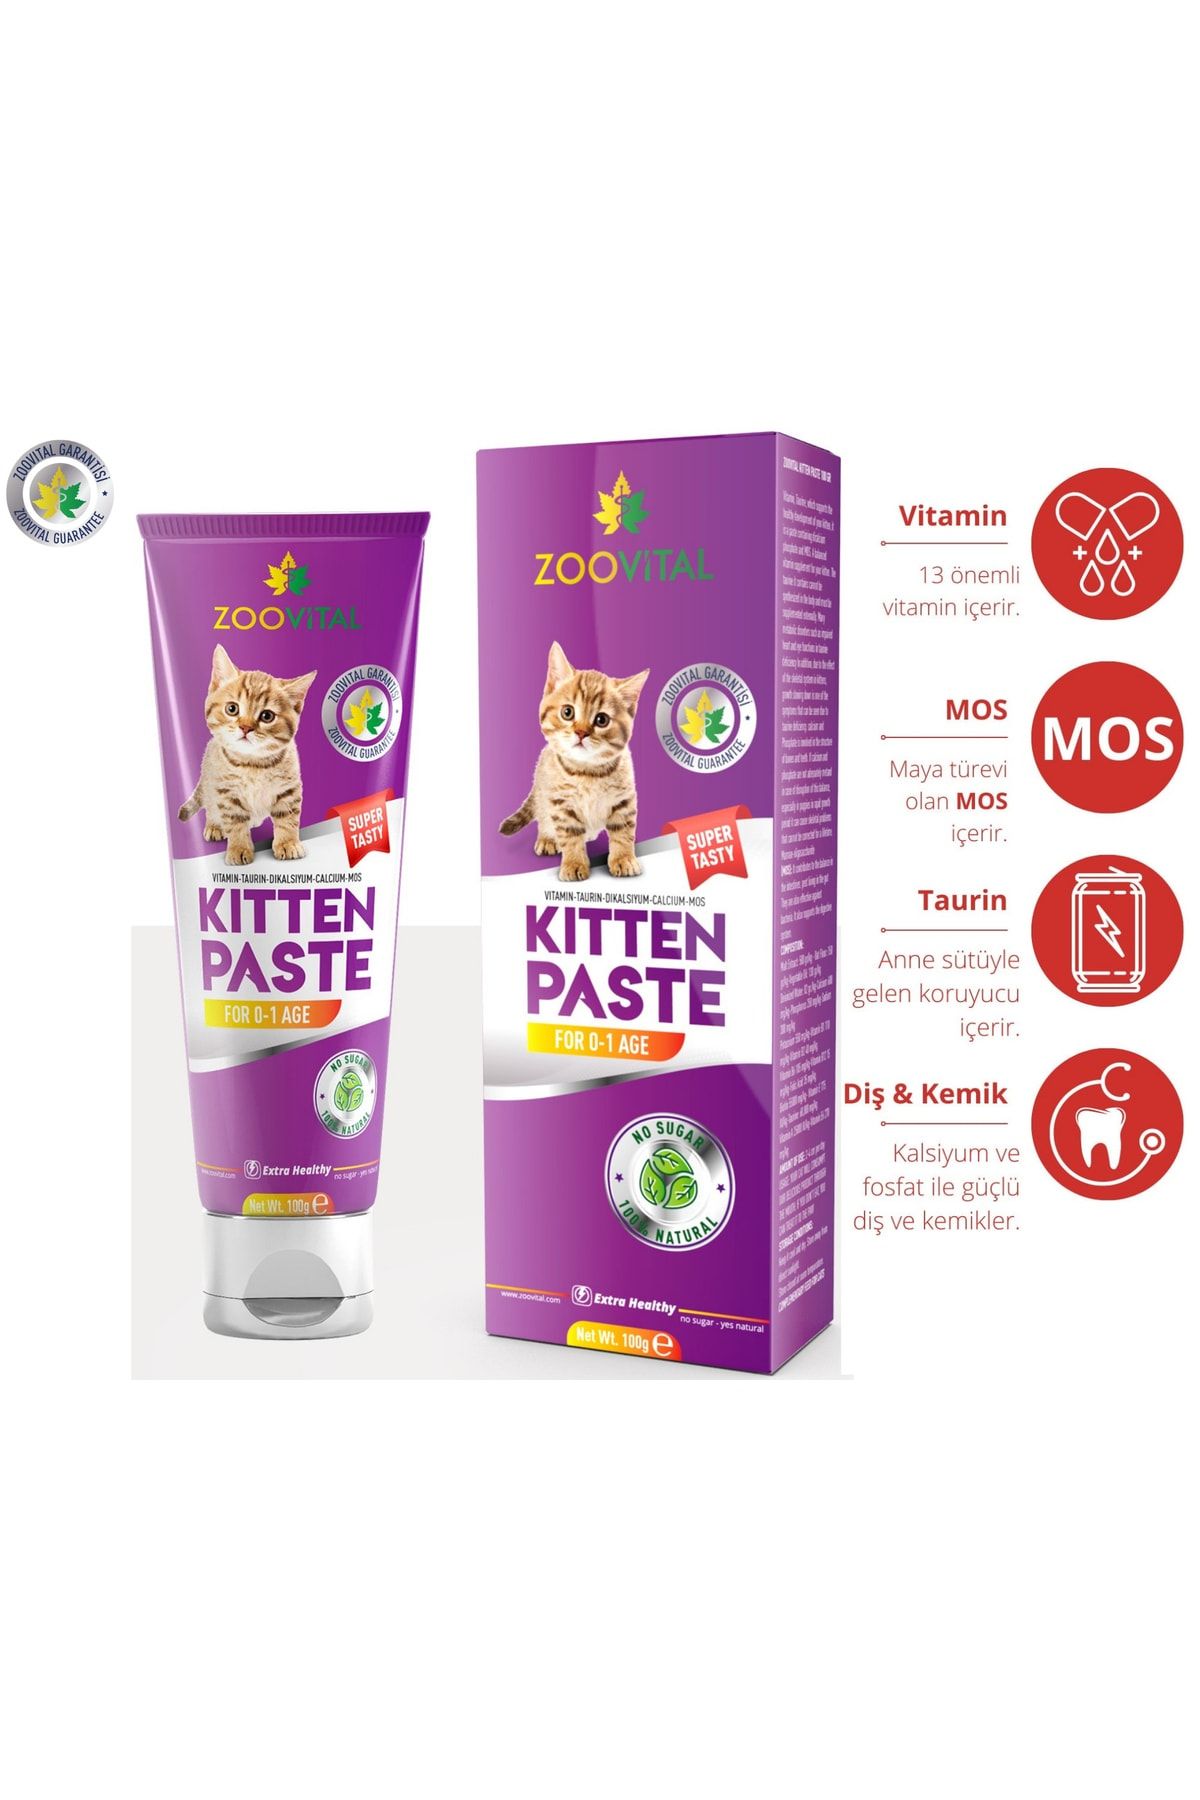 Zoovital Kitten Paste Yavru Kedi Macunu Vitamin Deposu 100 gr